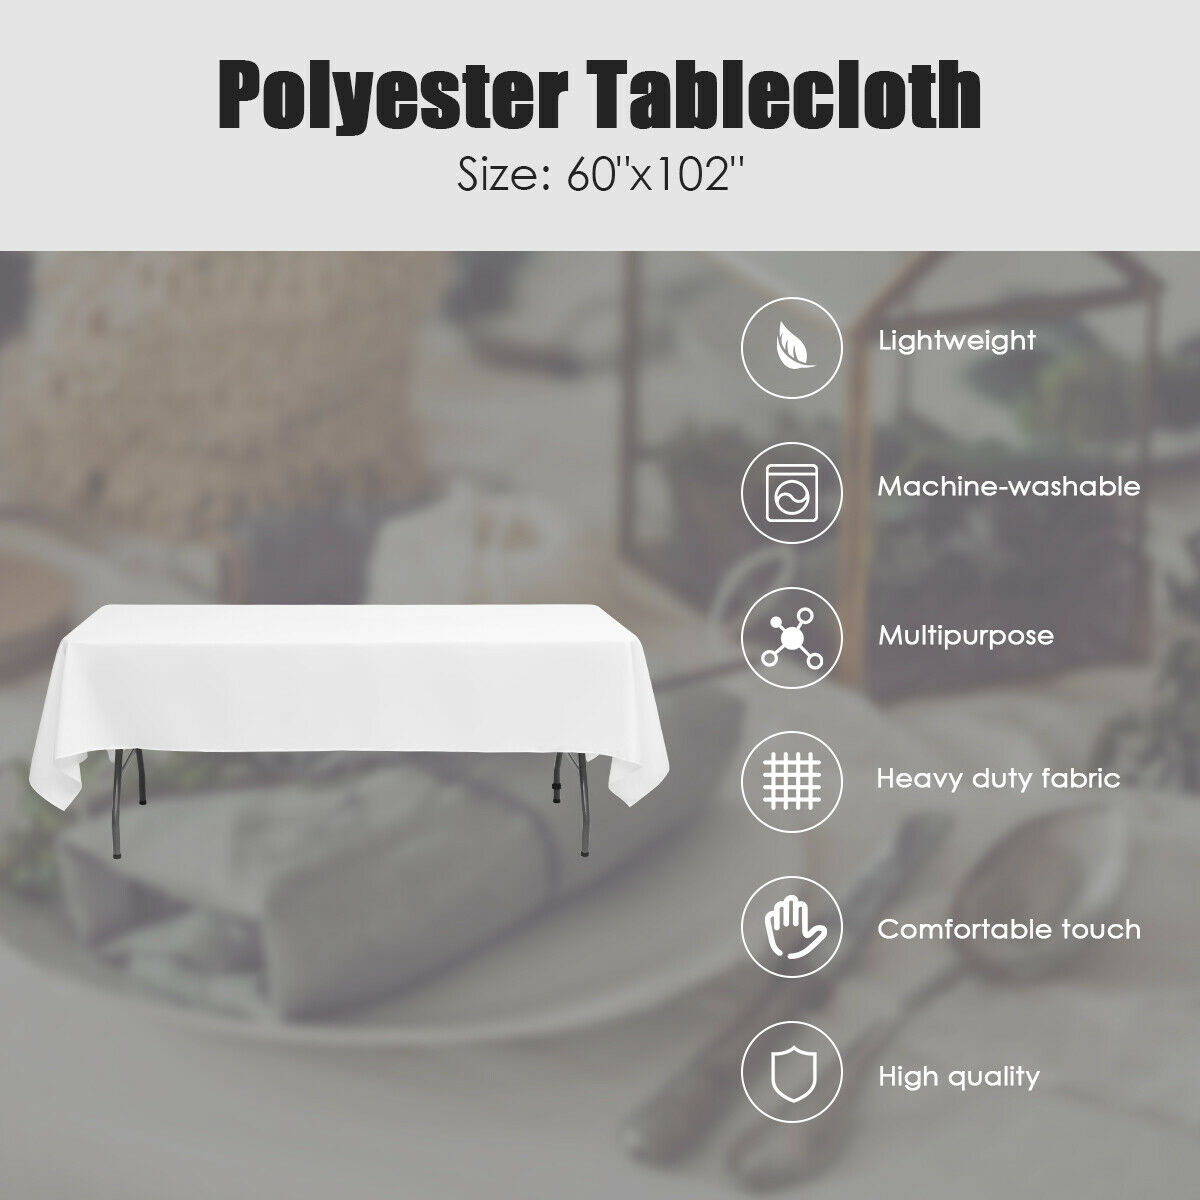 10 PCS 60 X 102 Rectangle Polyester Tablecloth Wedding Party Home Decor - White